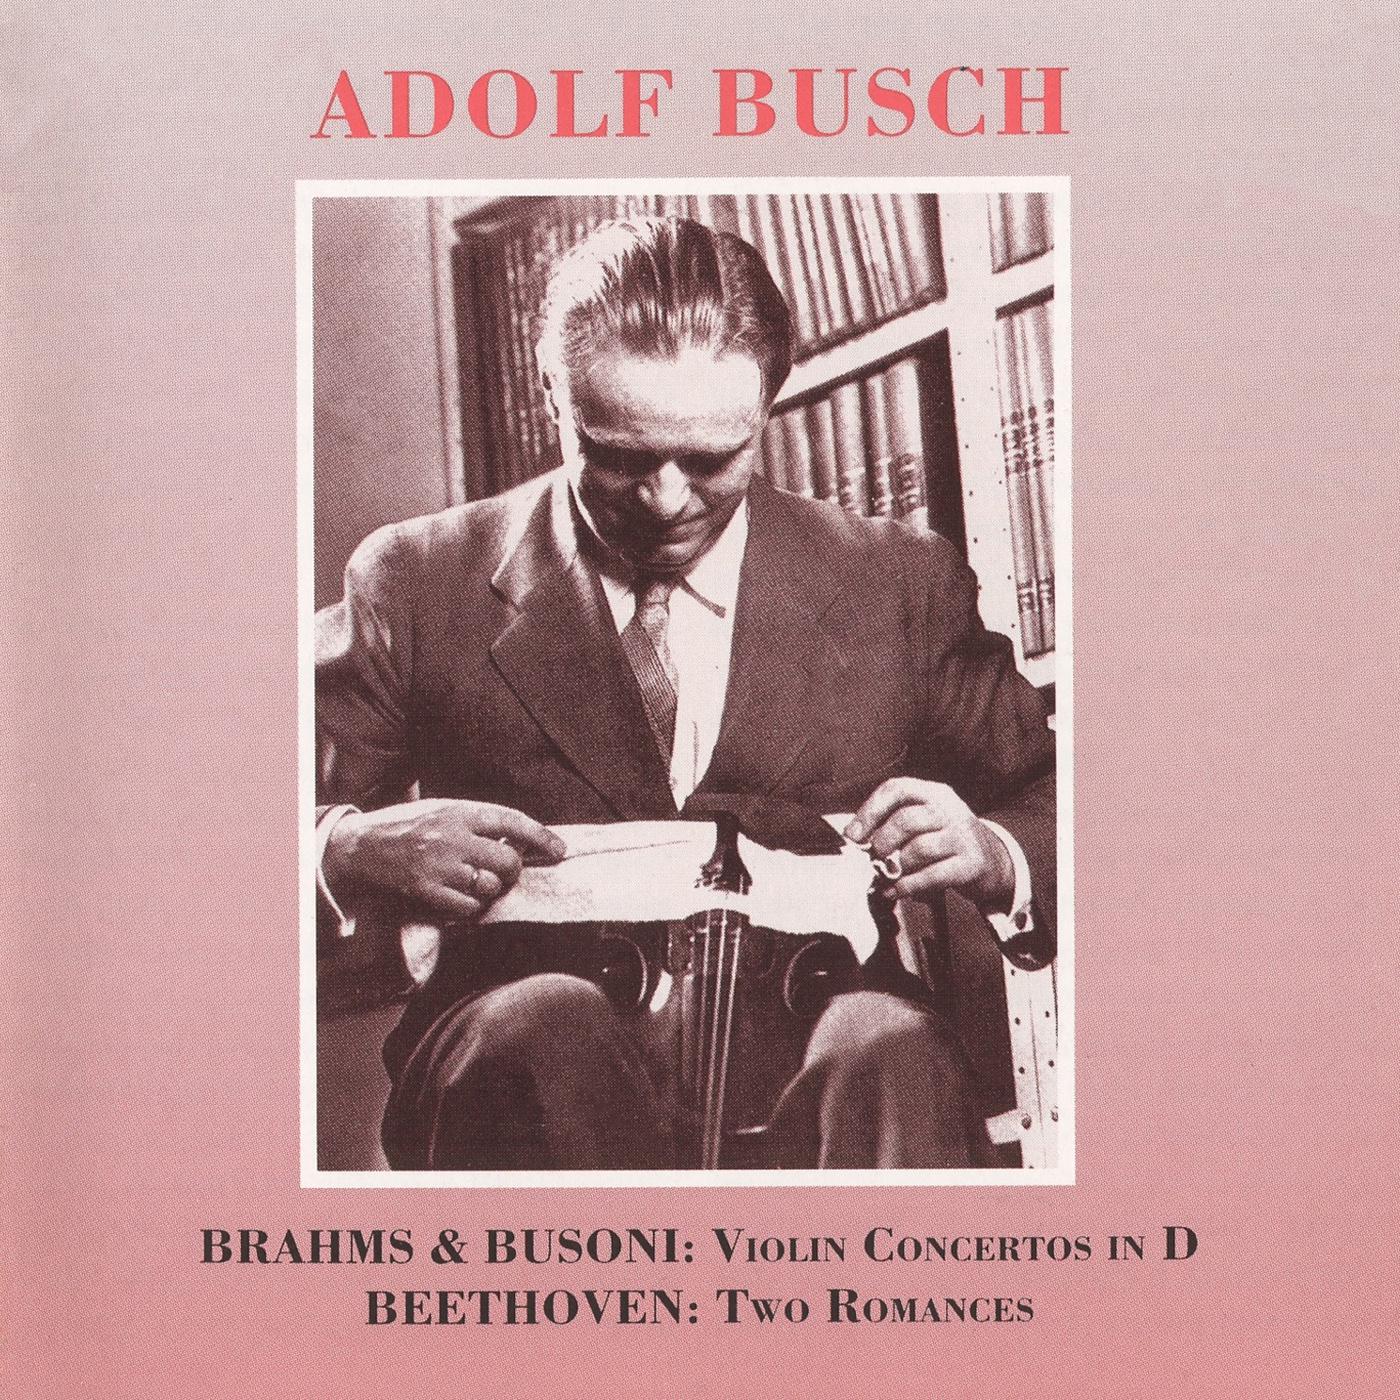 BRAHMS, J. / BUSONI, F.: Violin Concertos / BEETHOVEN, L. van: Romances Nos. 1 and 2 (Busch) (1936-1951)